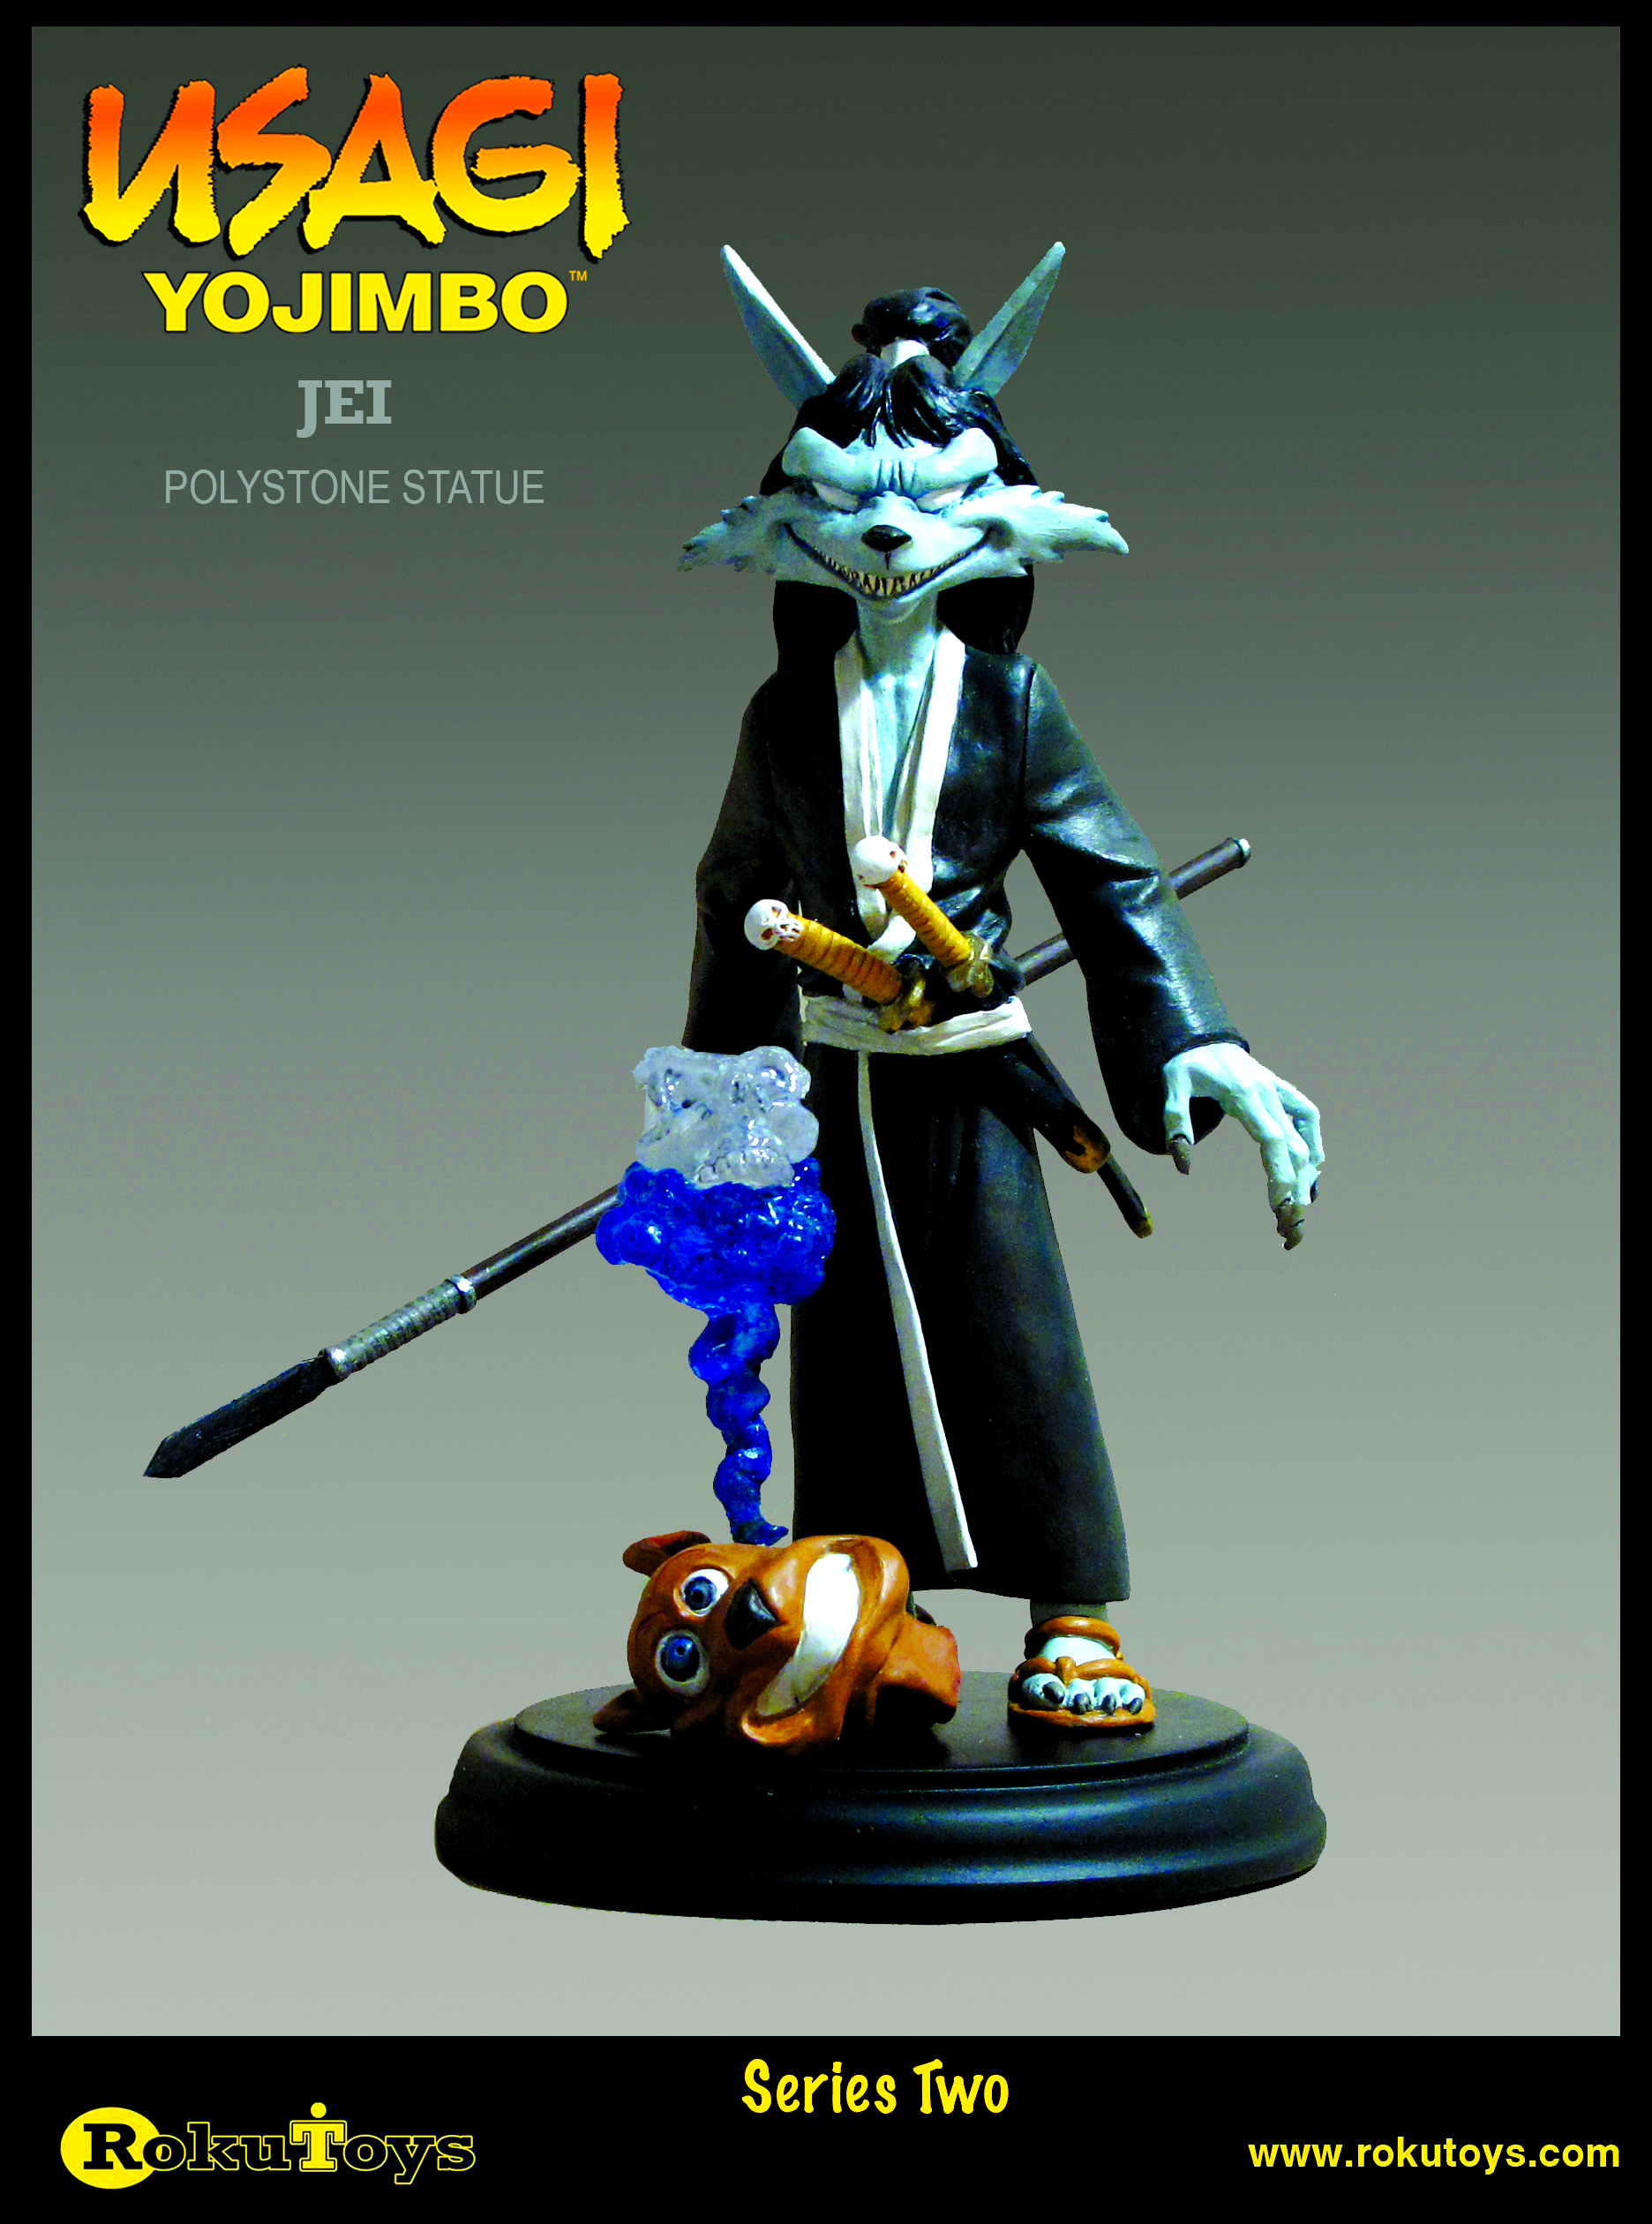 Usagi yojimbo jei statue (FEB111679) .